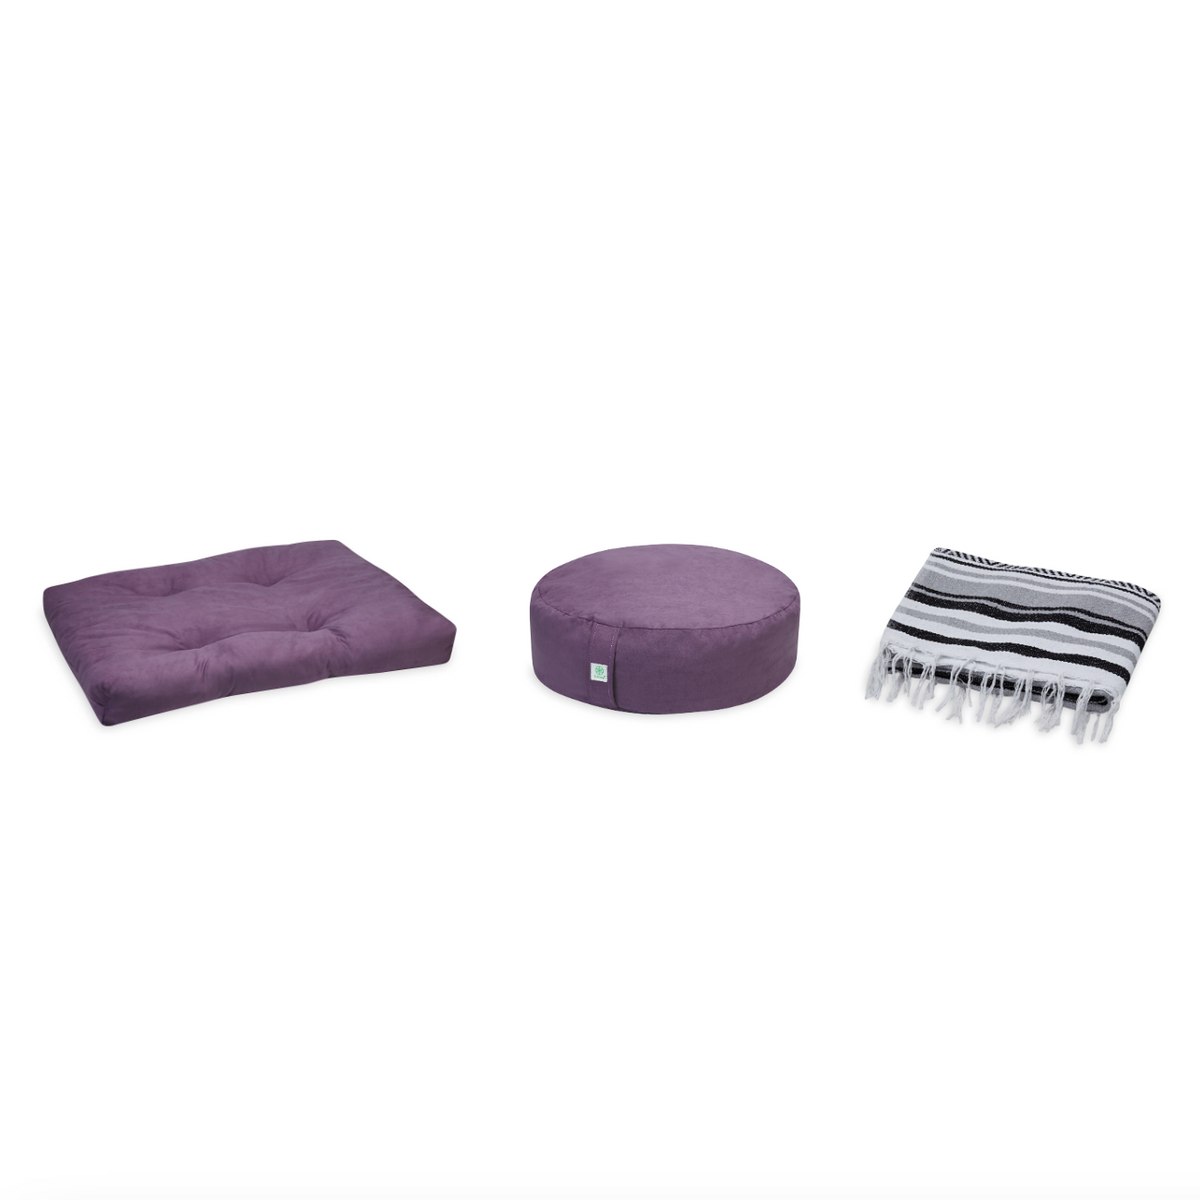 Meditation Bundle - Zabuton (Purple), Zafu (Purple), Blanket (Black/Grey)